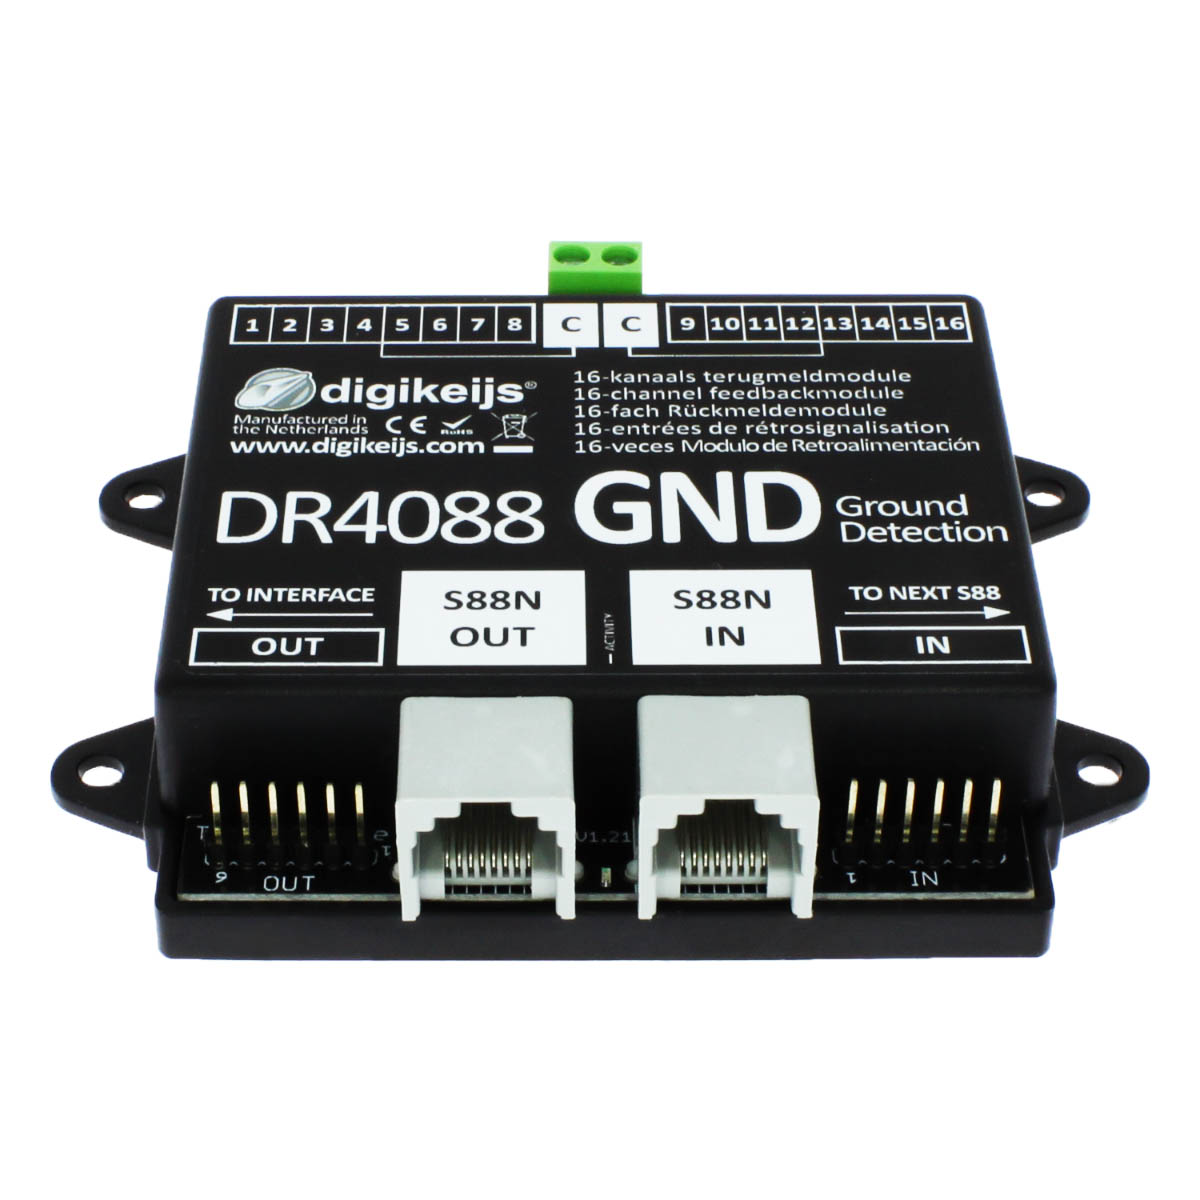 100-DR4088GND - 16-kanal Rückmeldemodul S88N